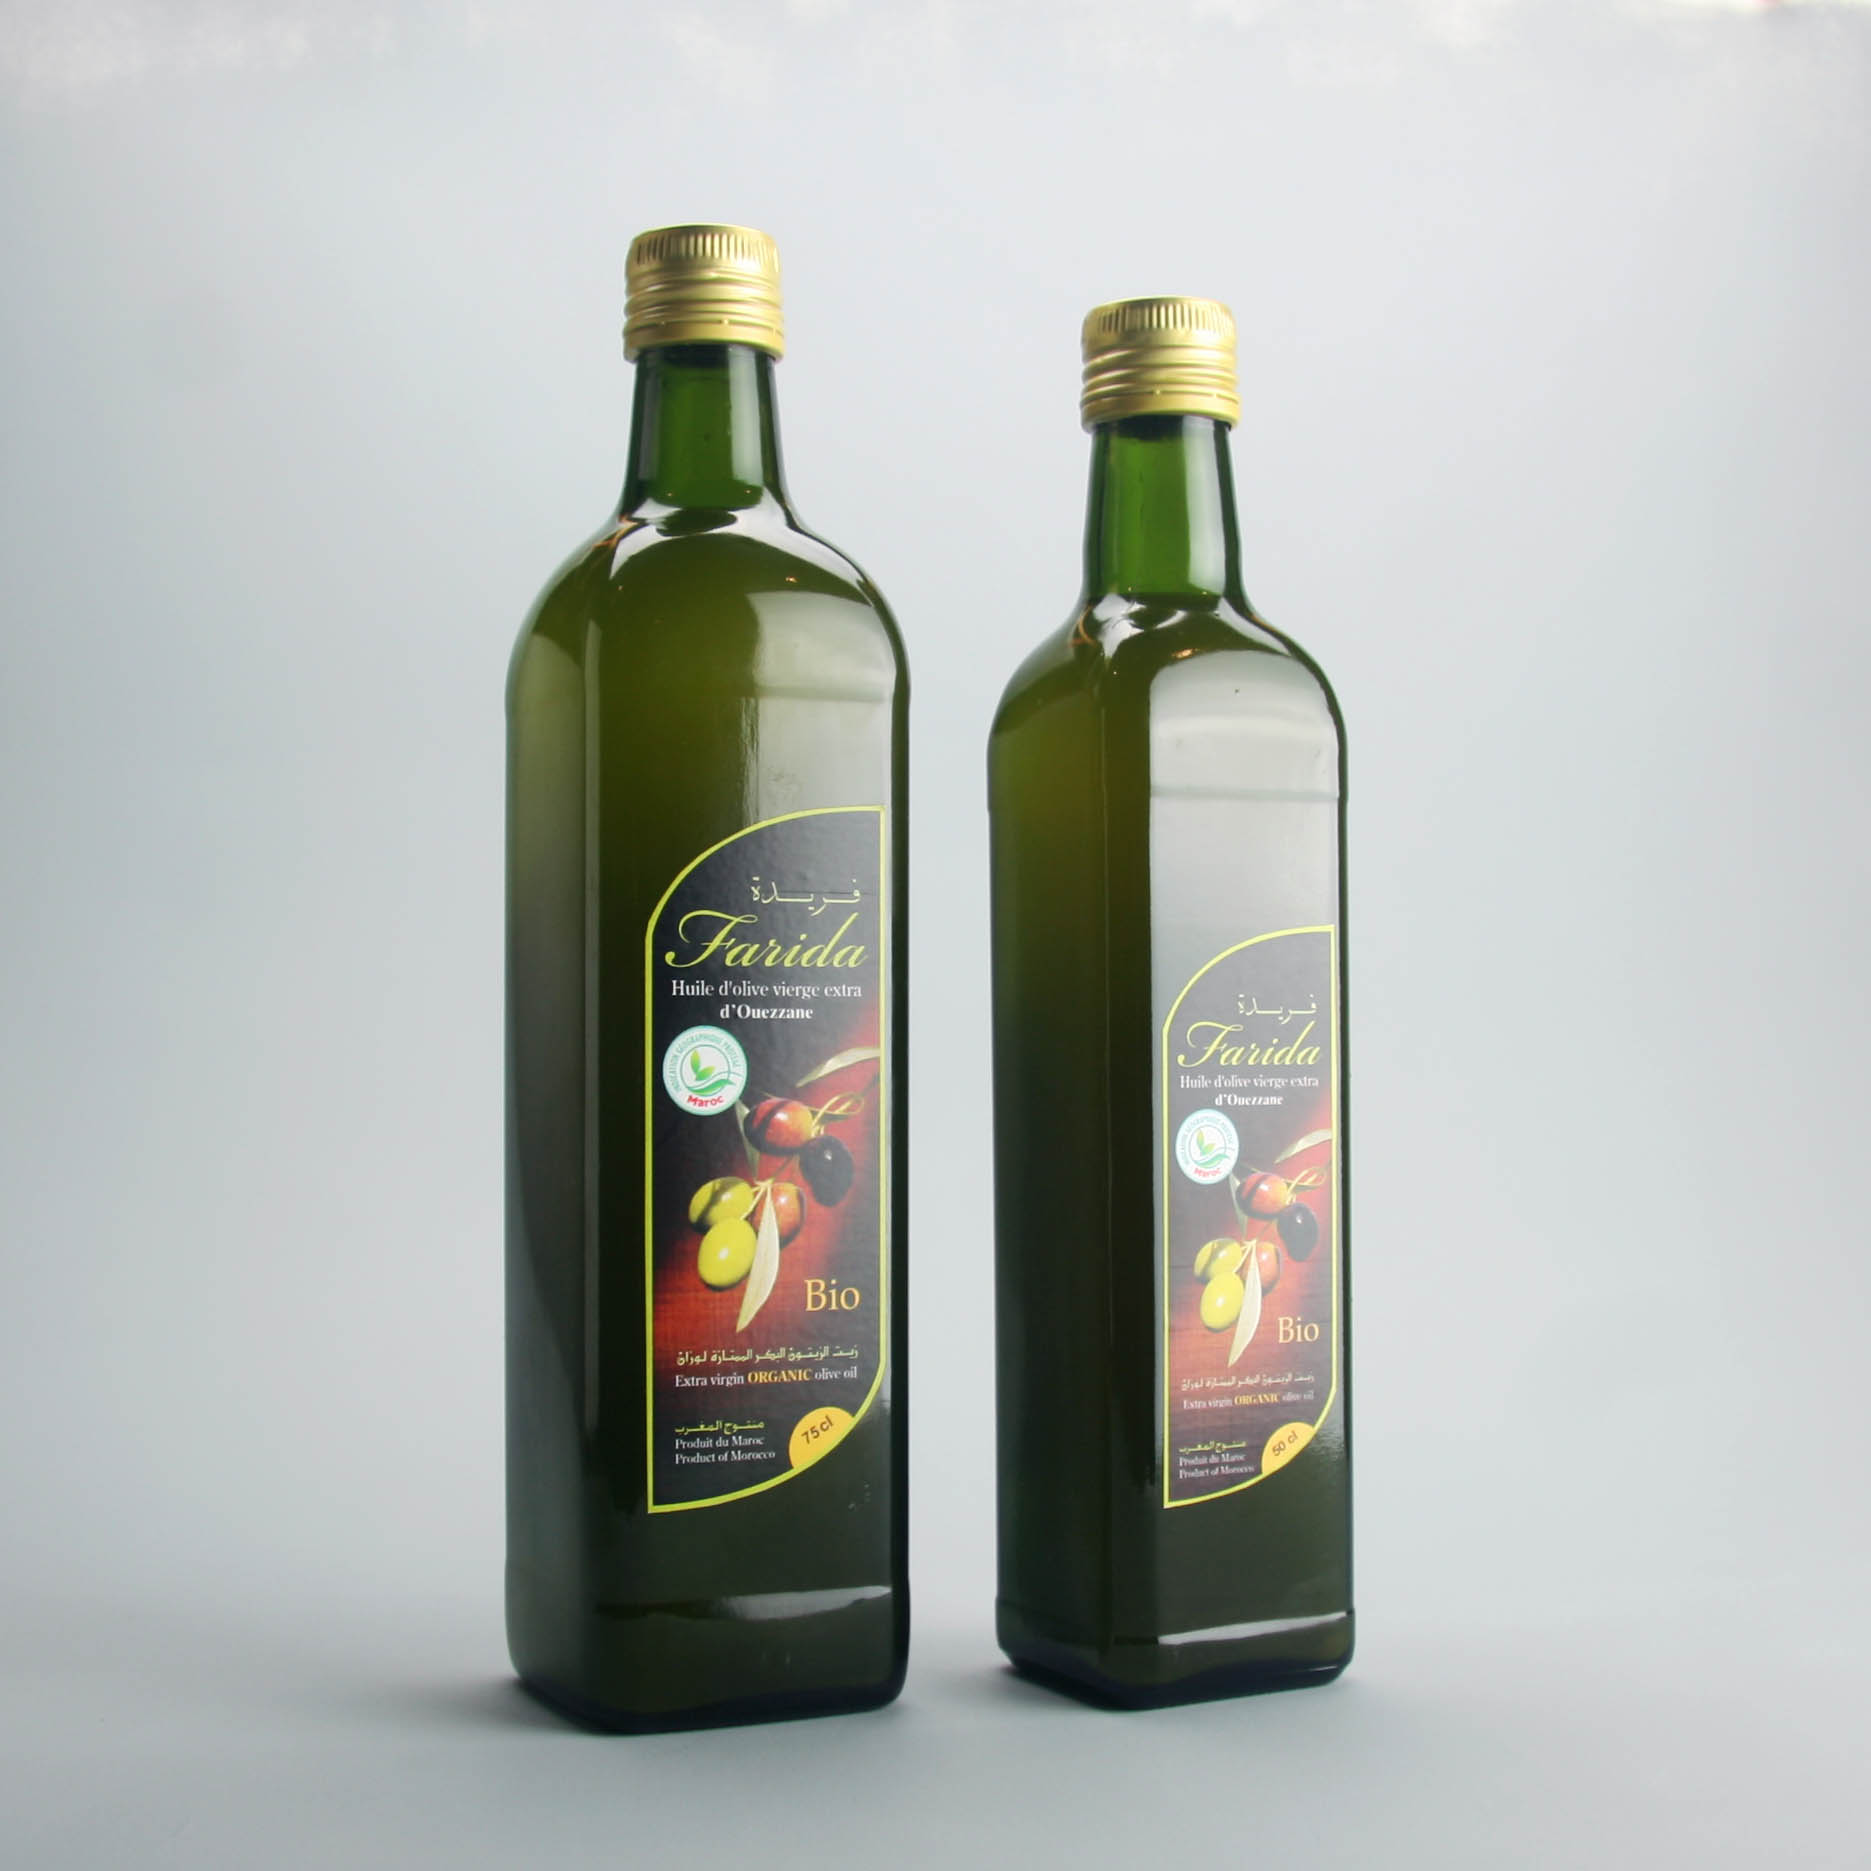 Huile d'olive bio vierge-extra زيت الزيتون بيو البكر الممتازة